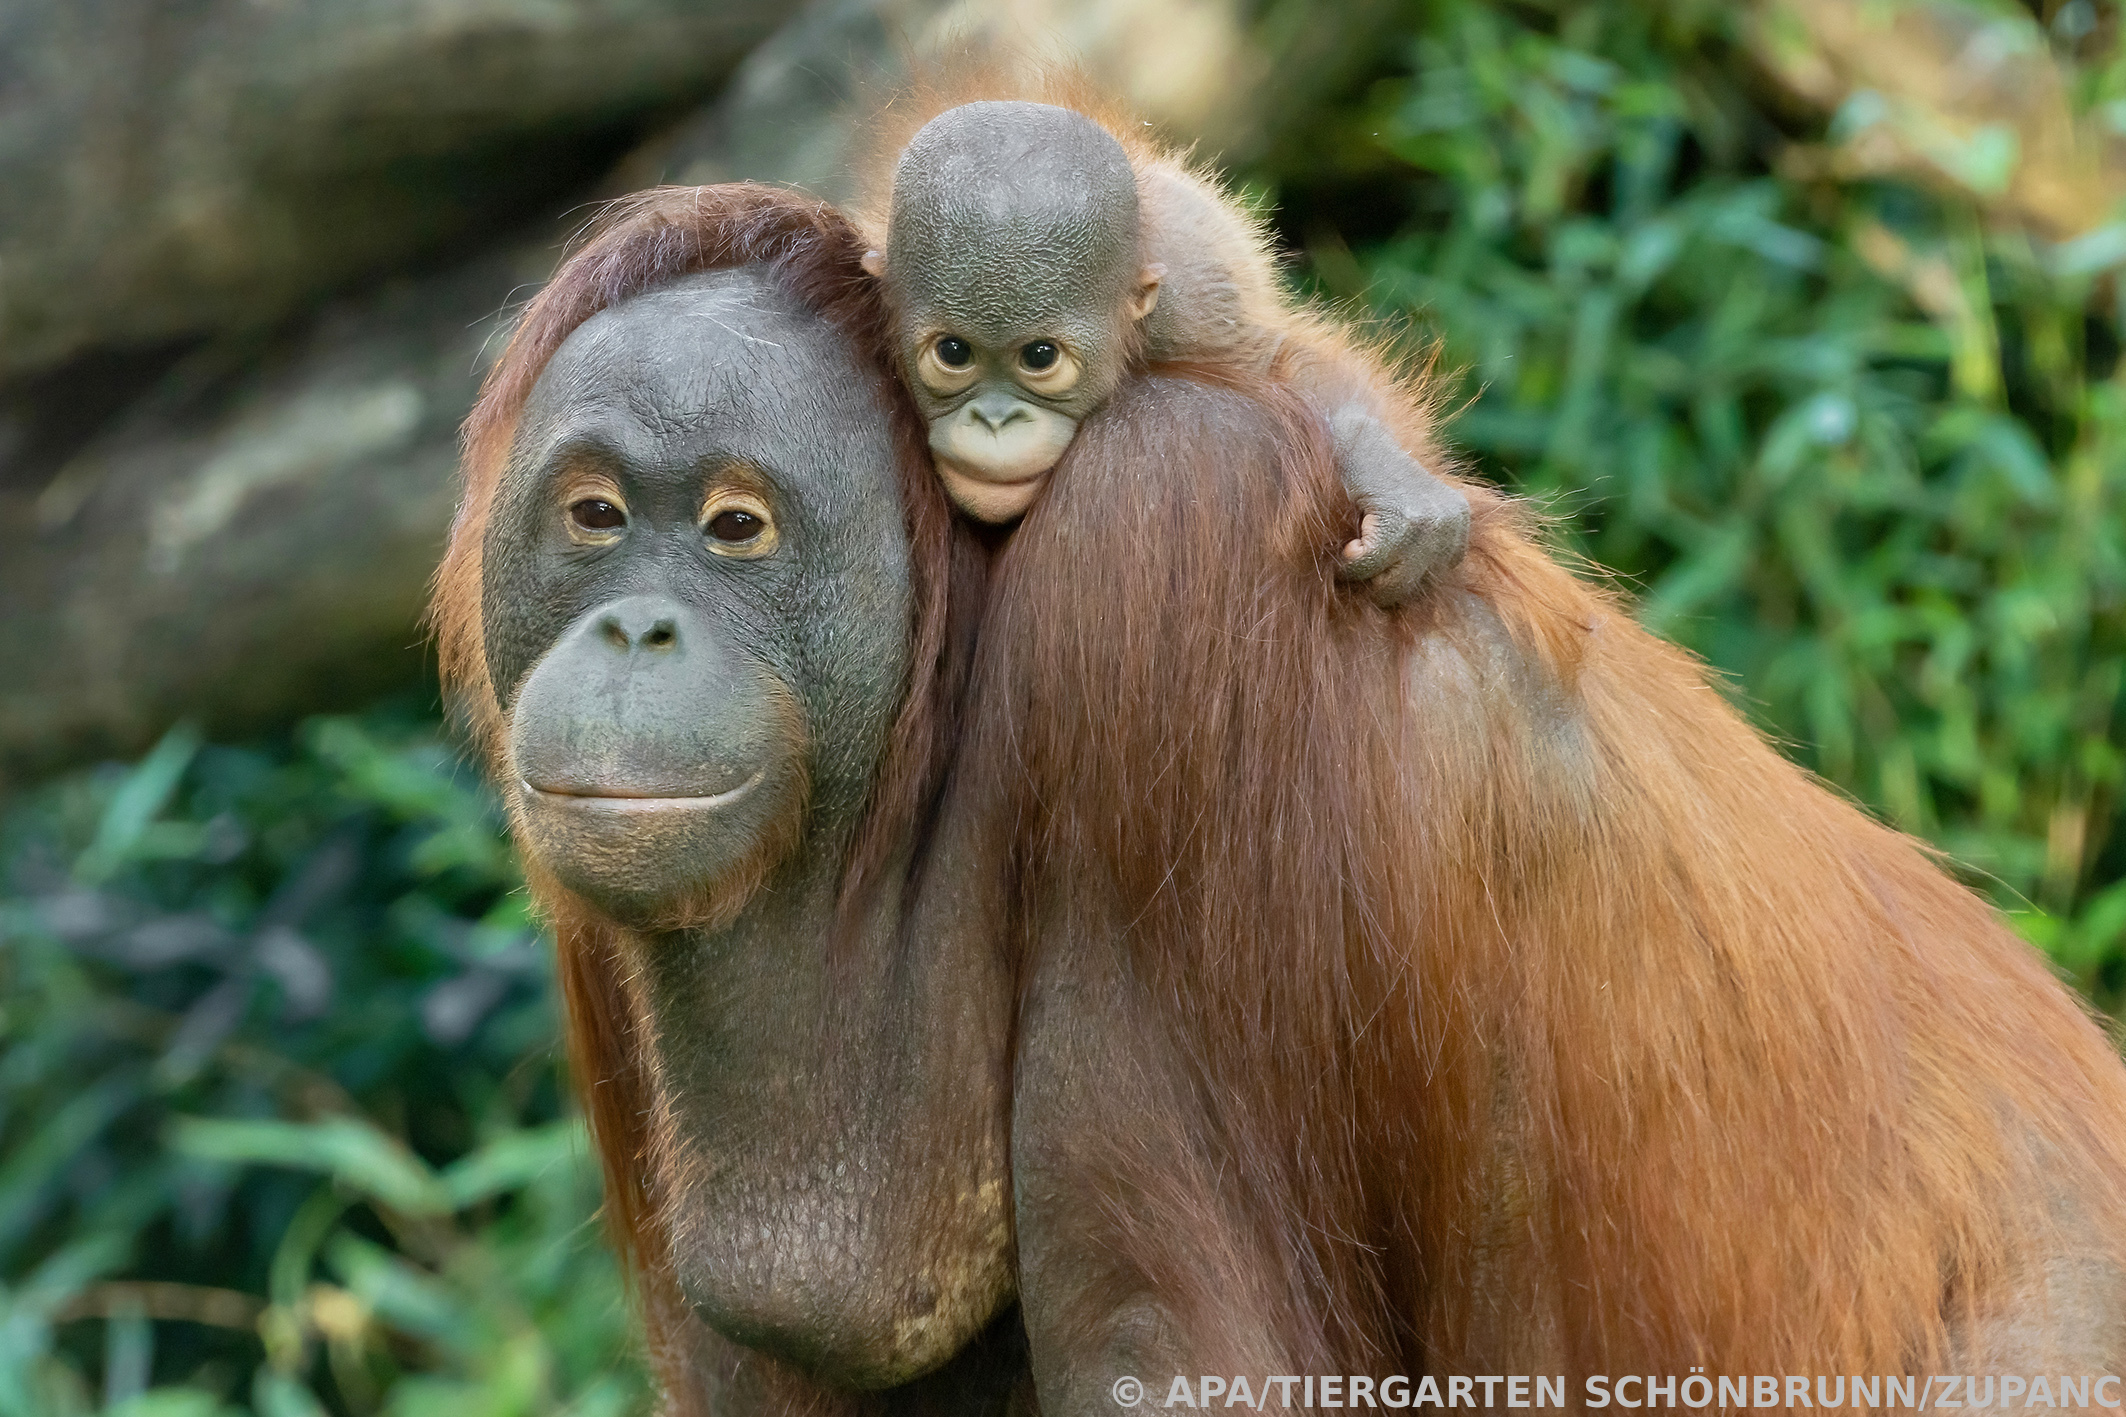 Advokasi akses terhadap orangutan yang terancam punah di Indonesia